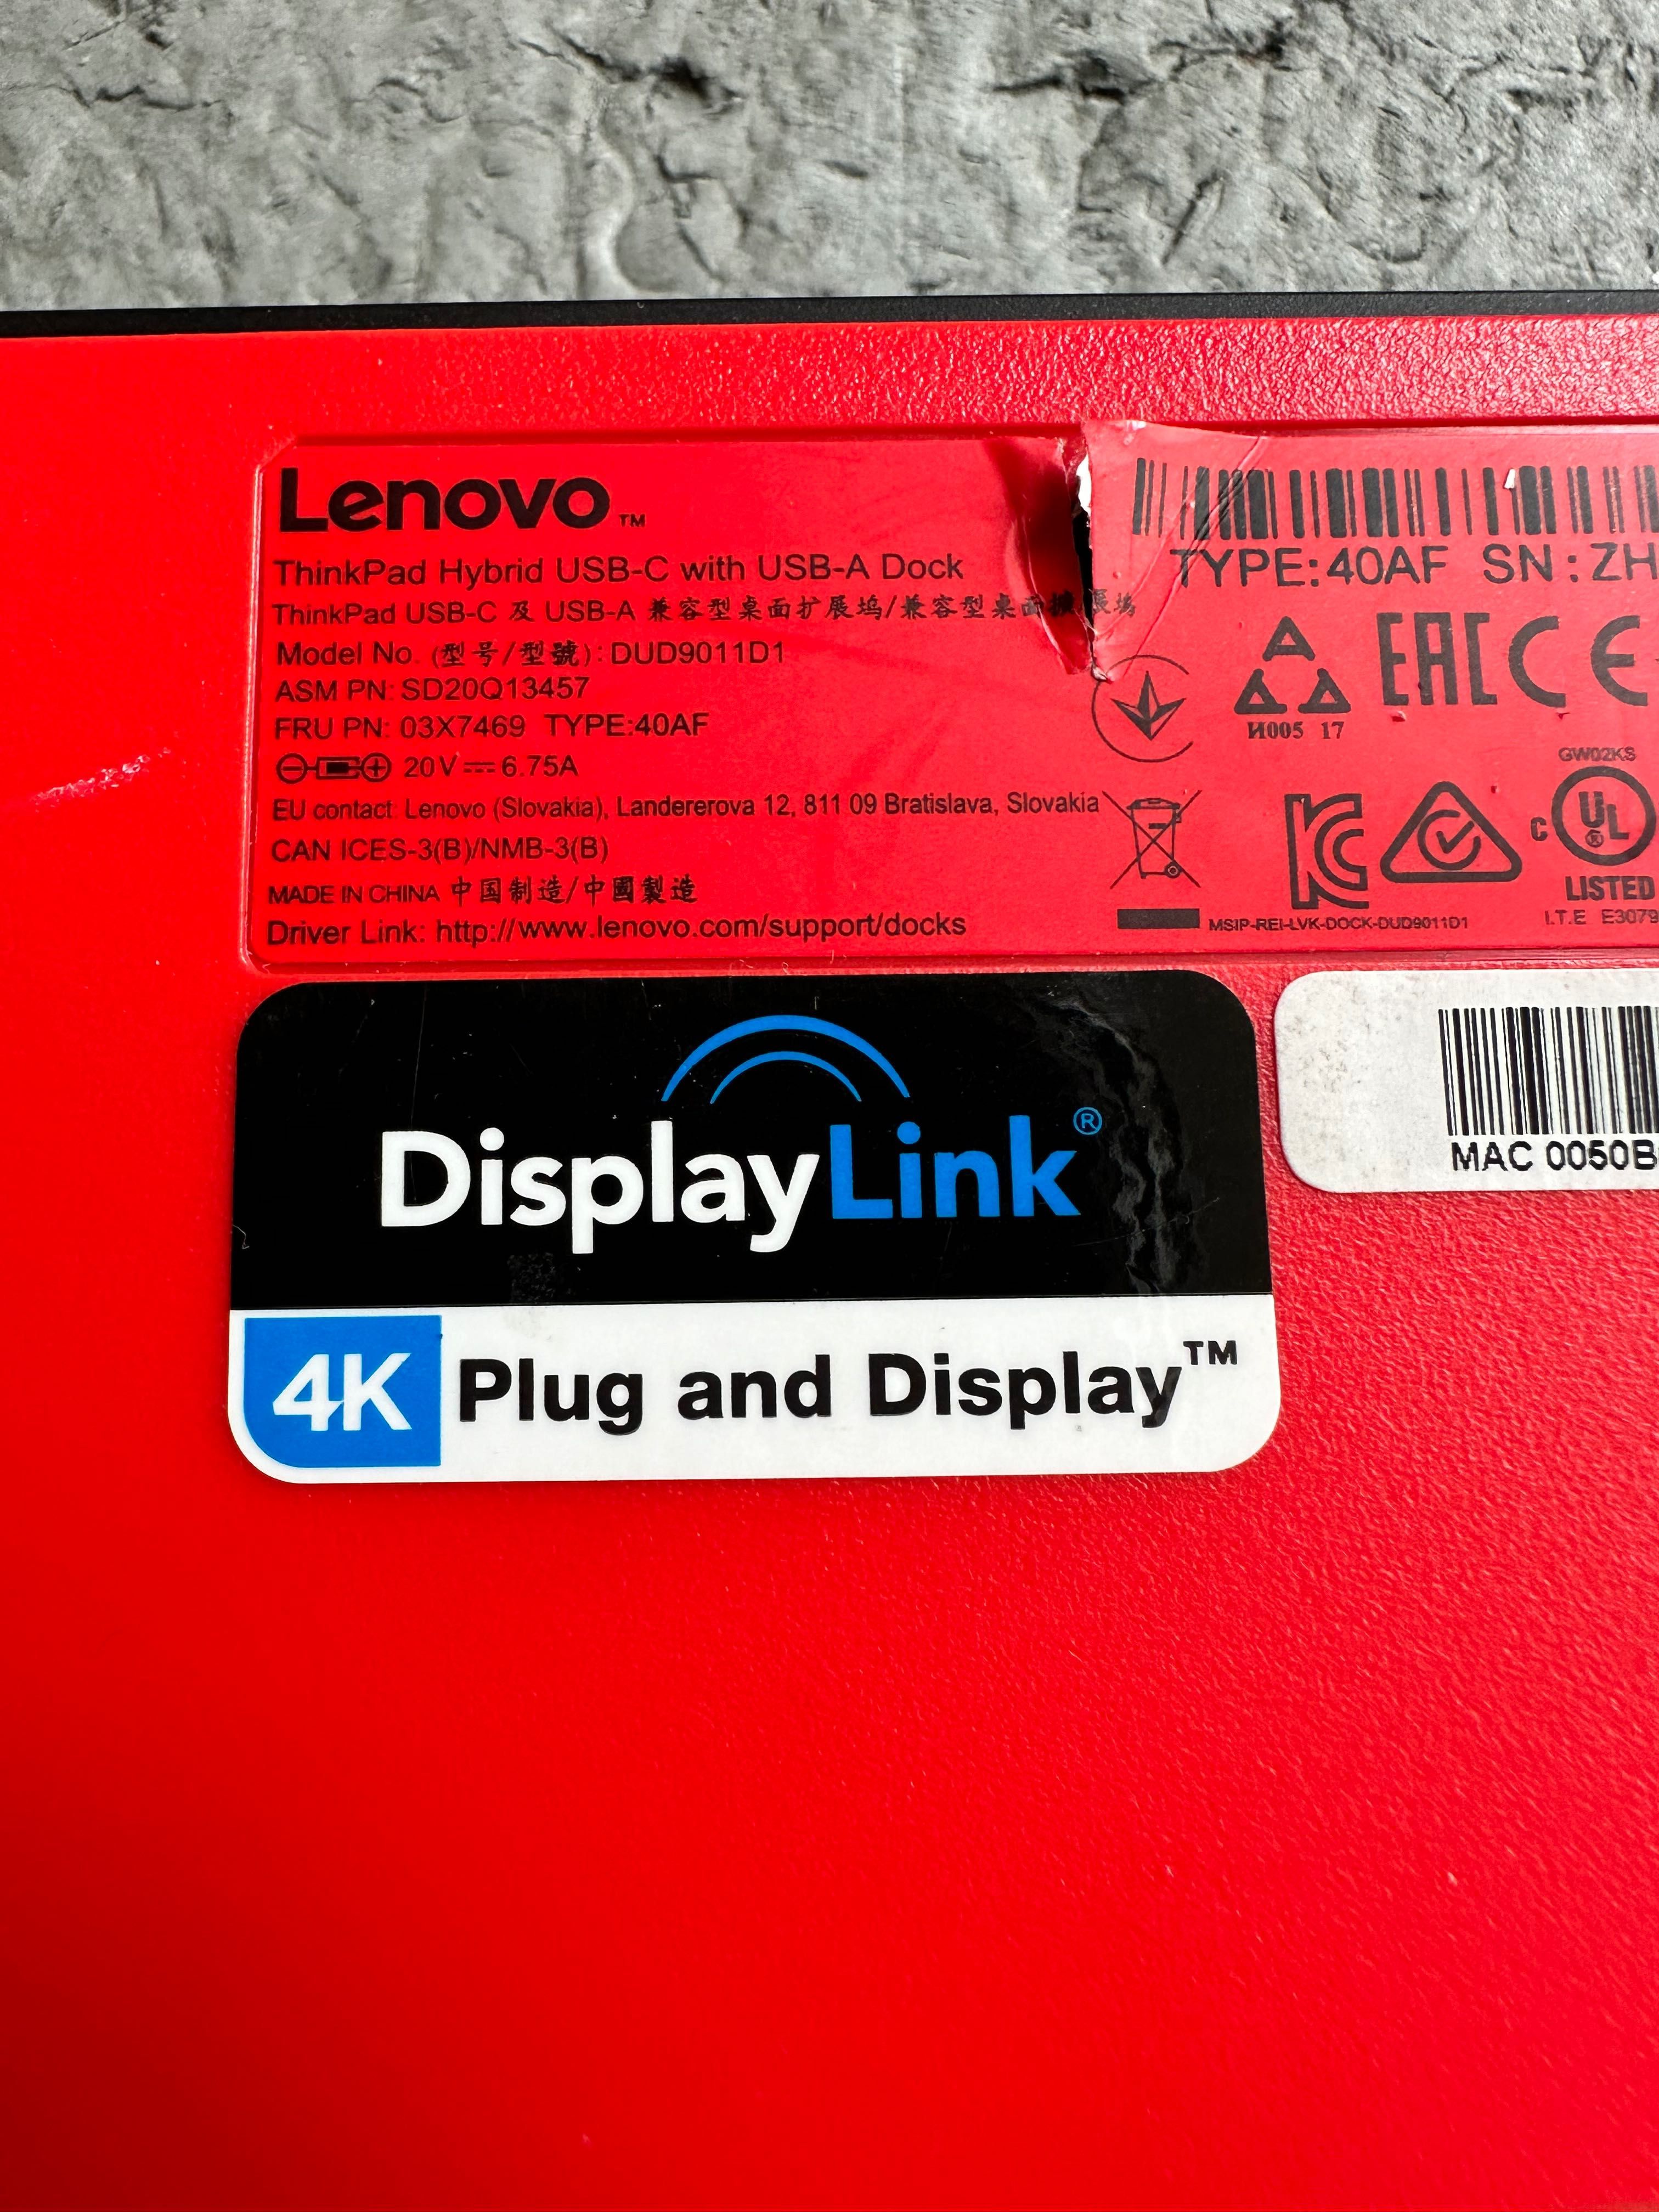 Docking Station Lenovo Thinkpad USB C defect